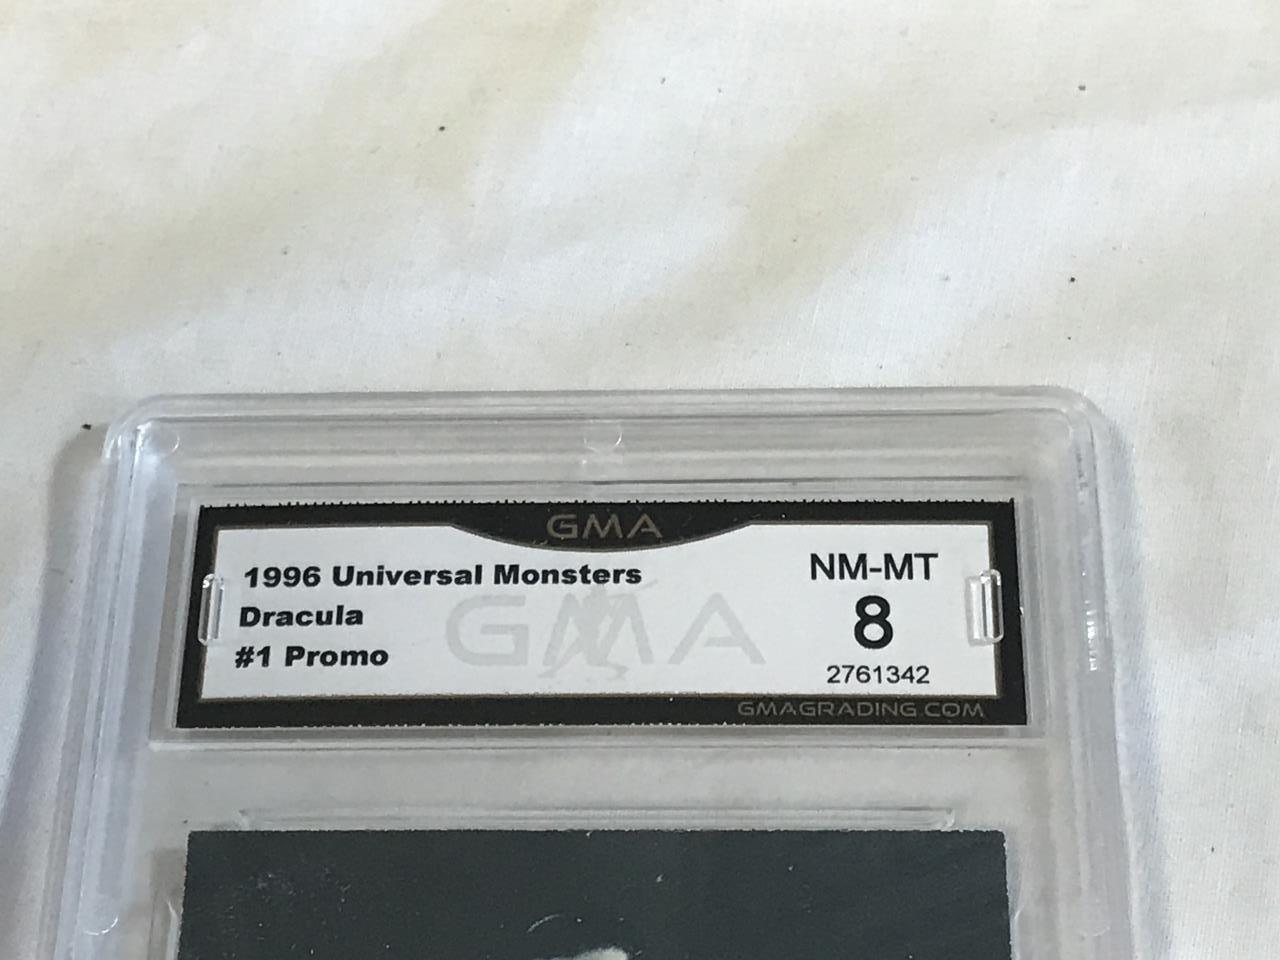 DRACULA 1996 Universal Monsters Card Graded 8